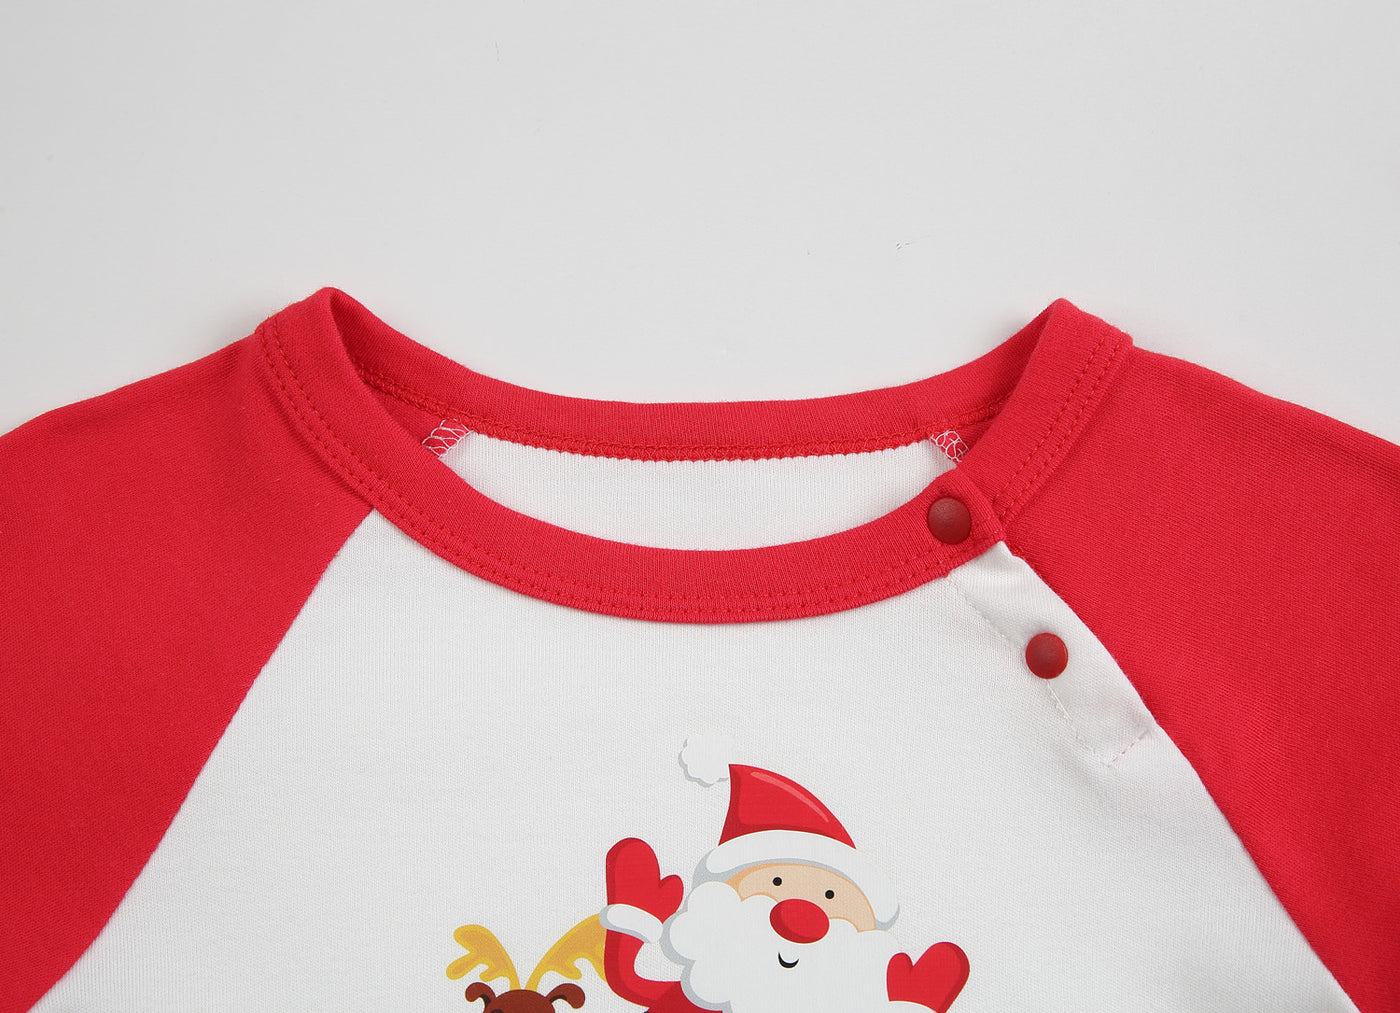 Baby Christmas Outfit Merry Christmas Santa Long Sleeve Bodysuit n Pants Two Piece Set - Little Kooma